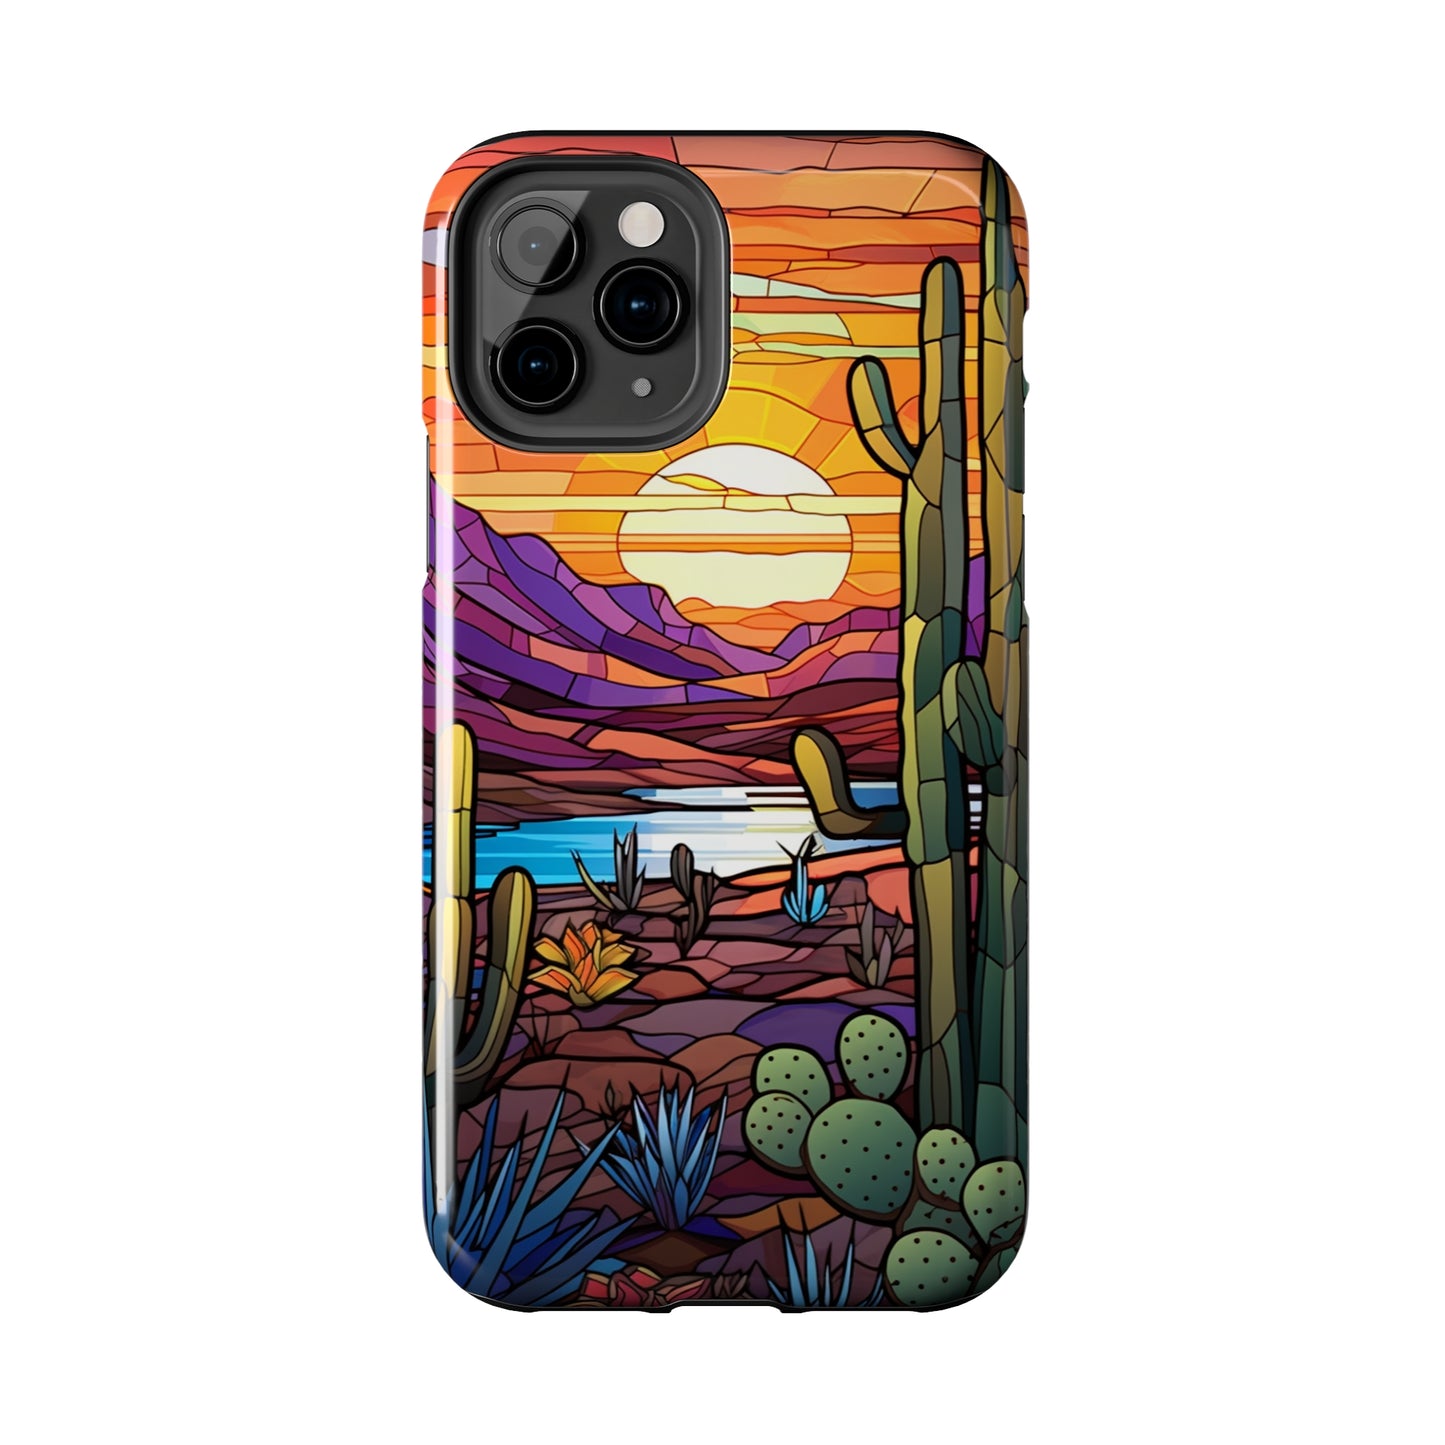 Cactus Desert Sunset